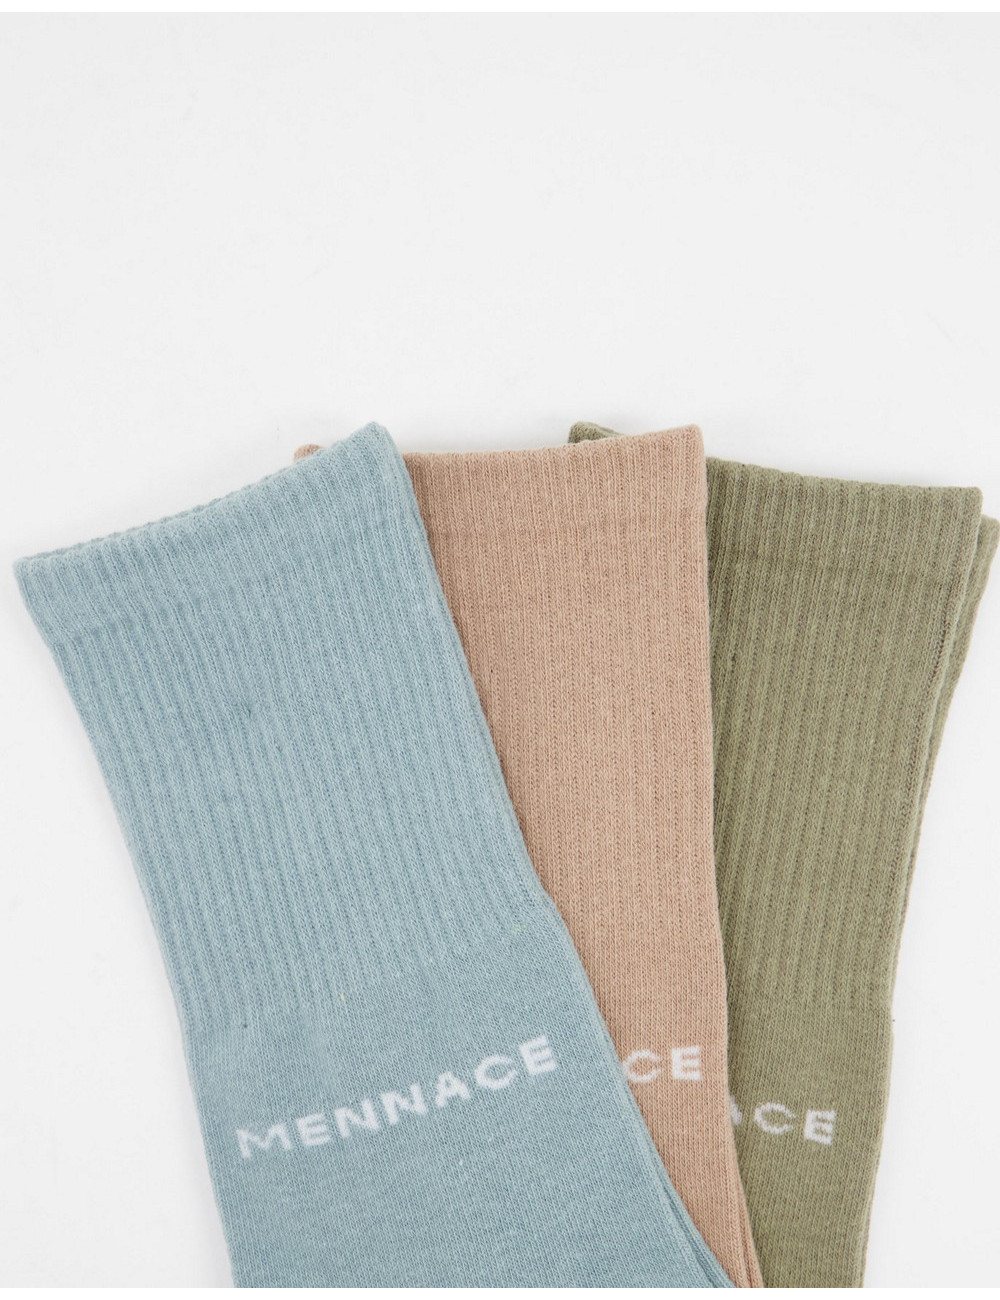 Mennace 3 pack socks in pastel